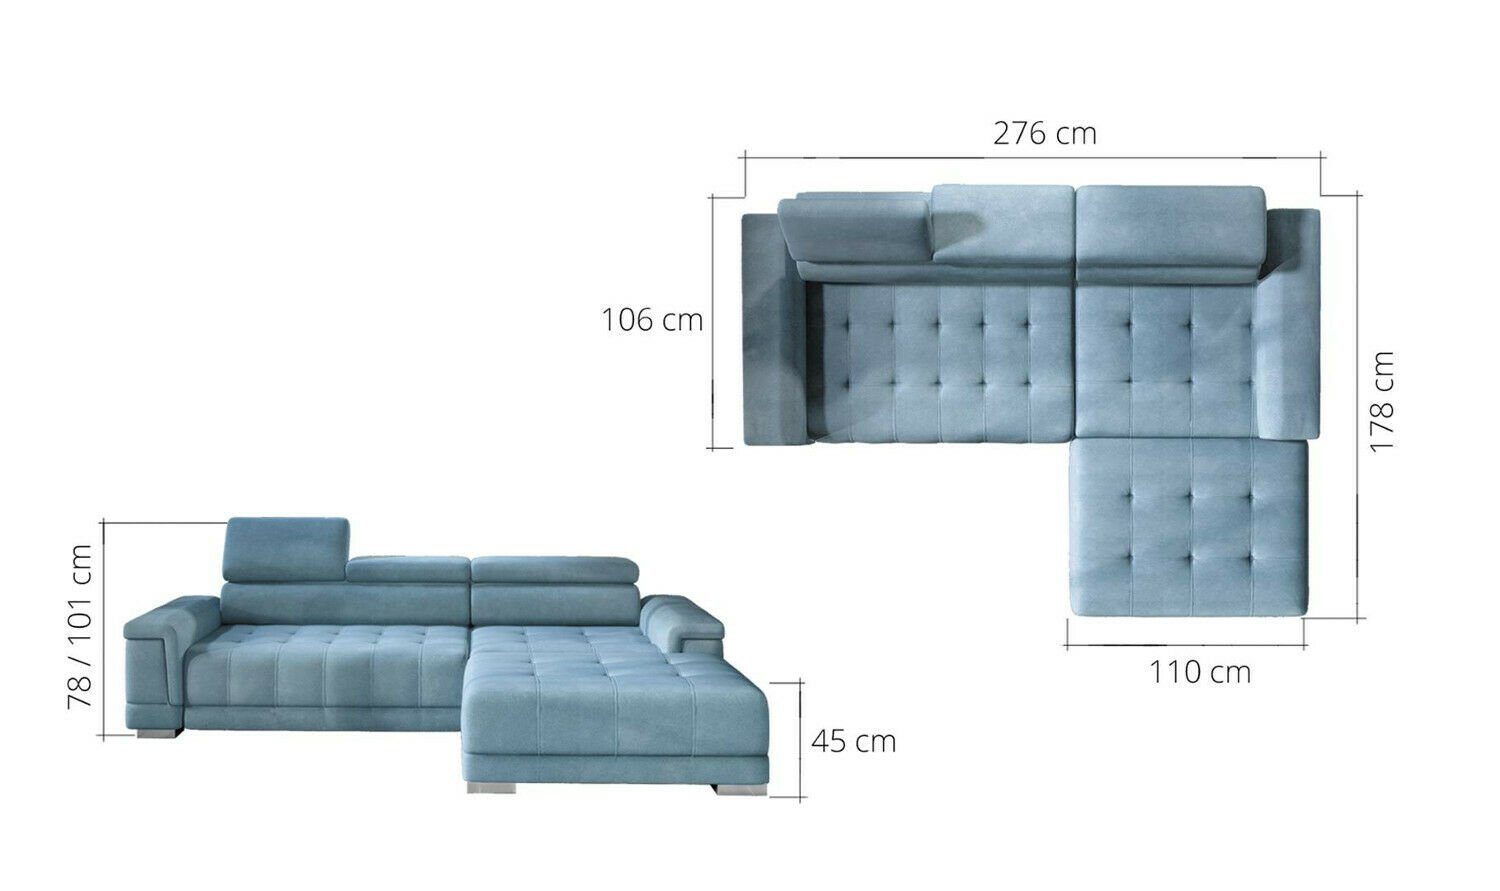 Textil Ecksofa, Modern Blau Couch Design Ecksofa L-Form JVmoebel Sofa Polster